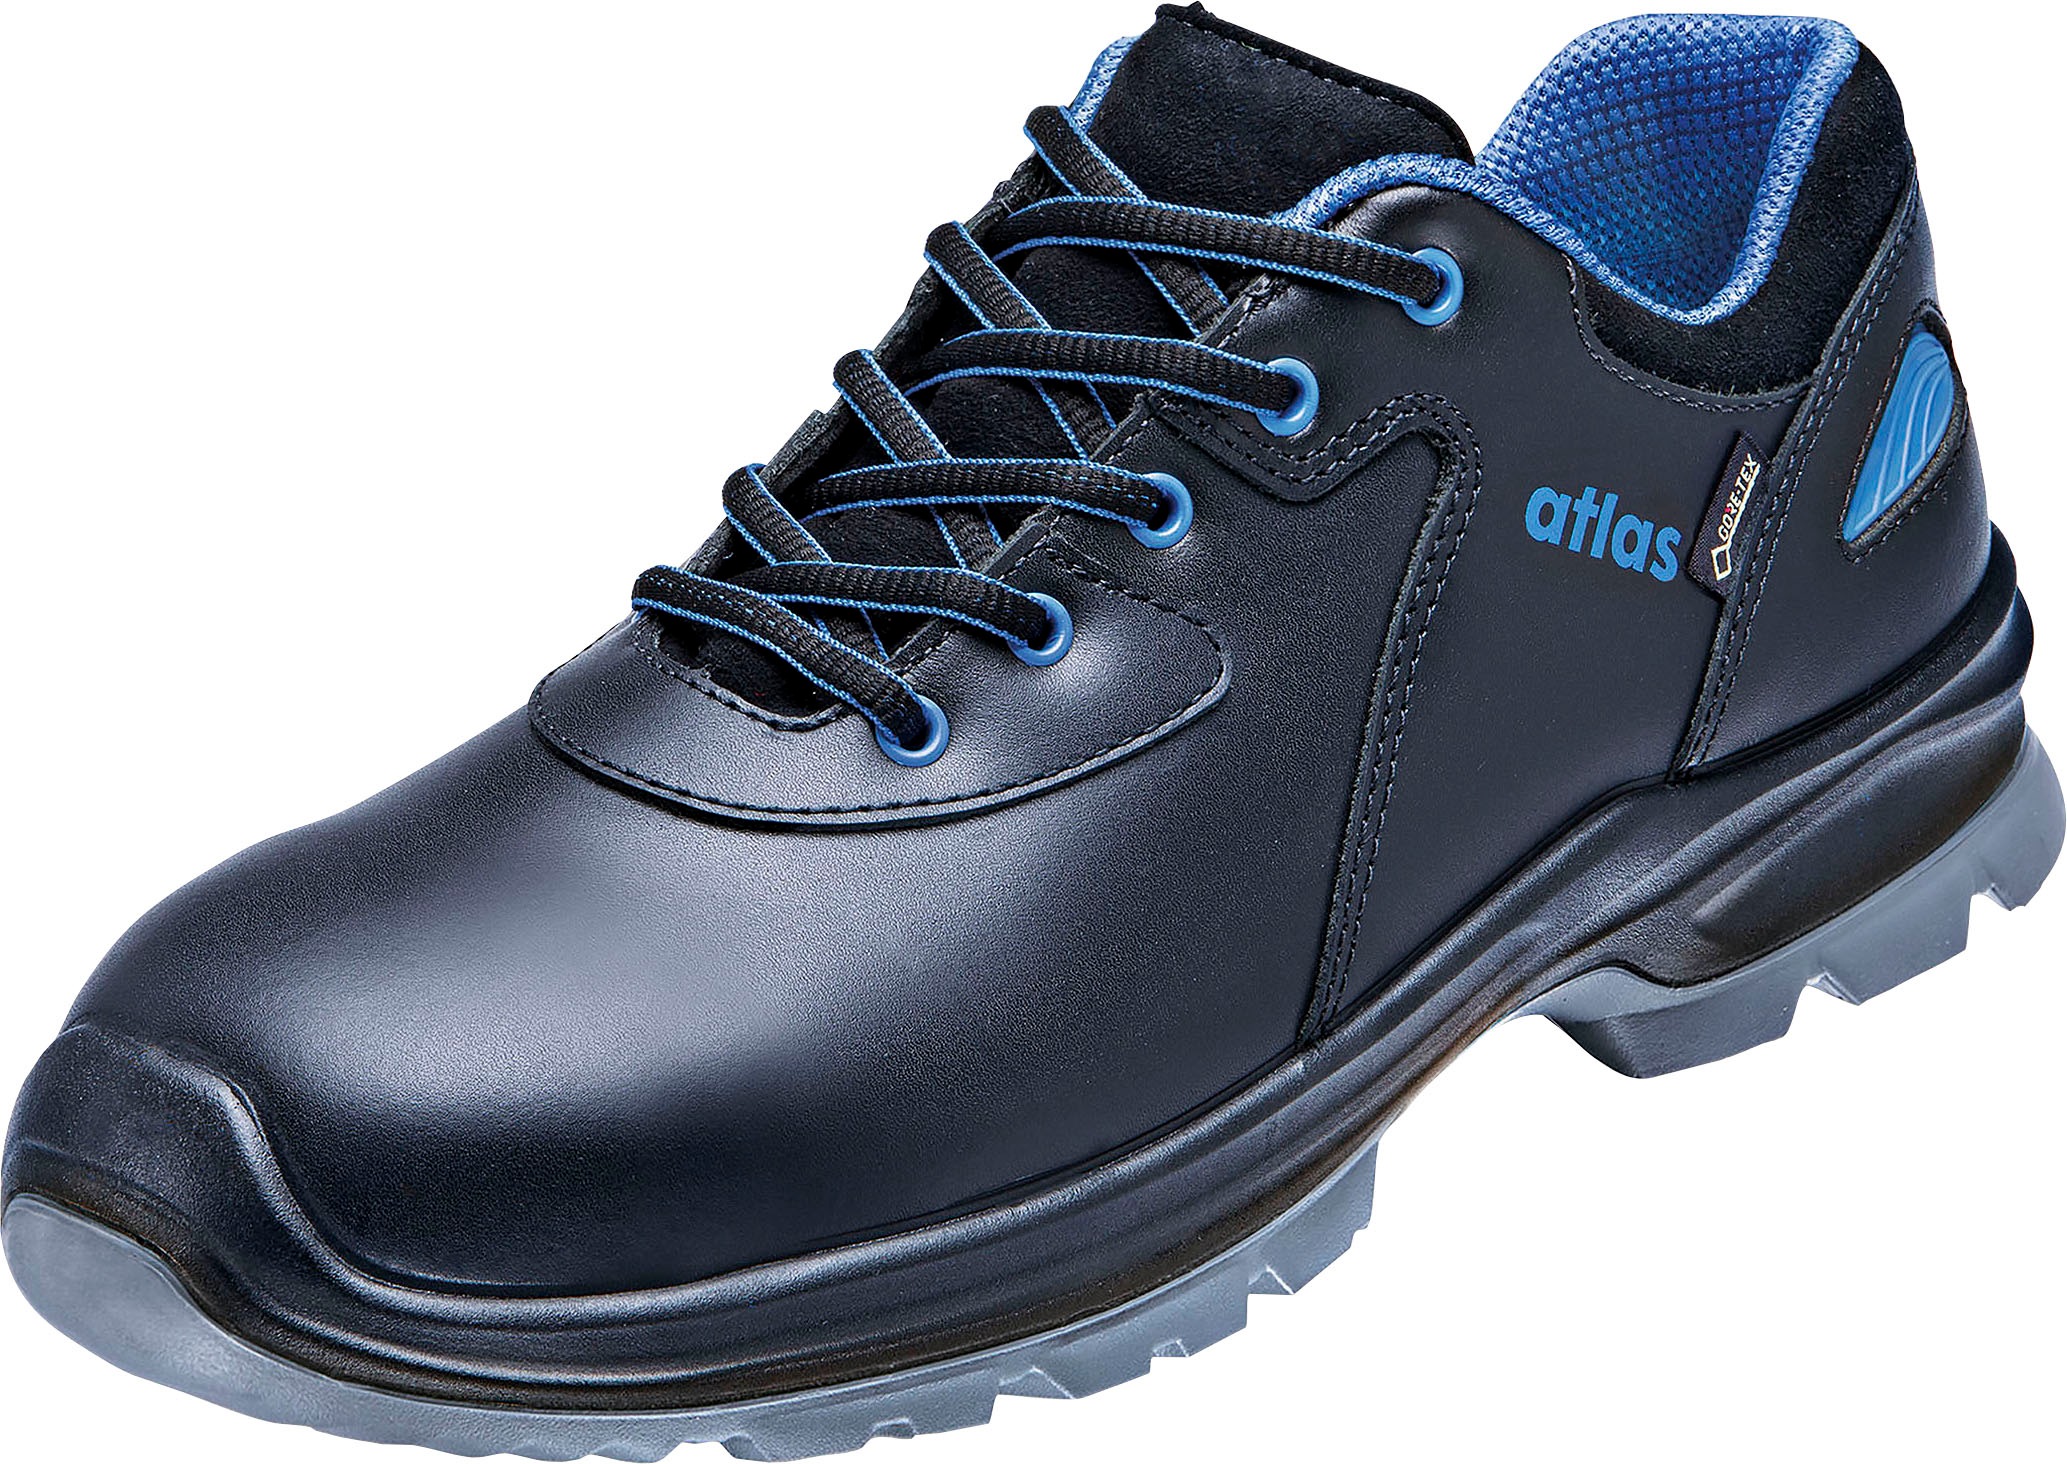 Atlas Schuhe Sicherheitsschuh 2.0 S3 bei »GTX 563 XP«, OTTO